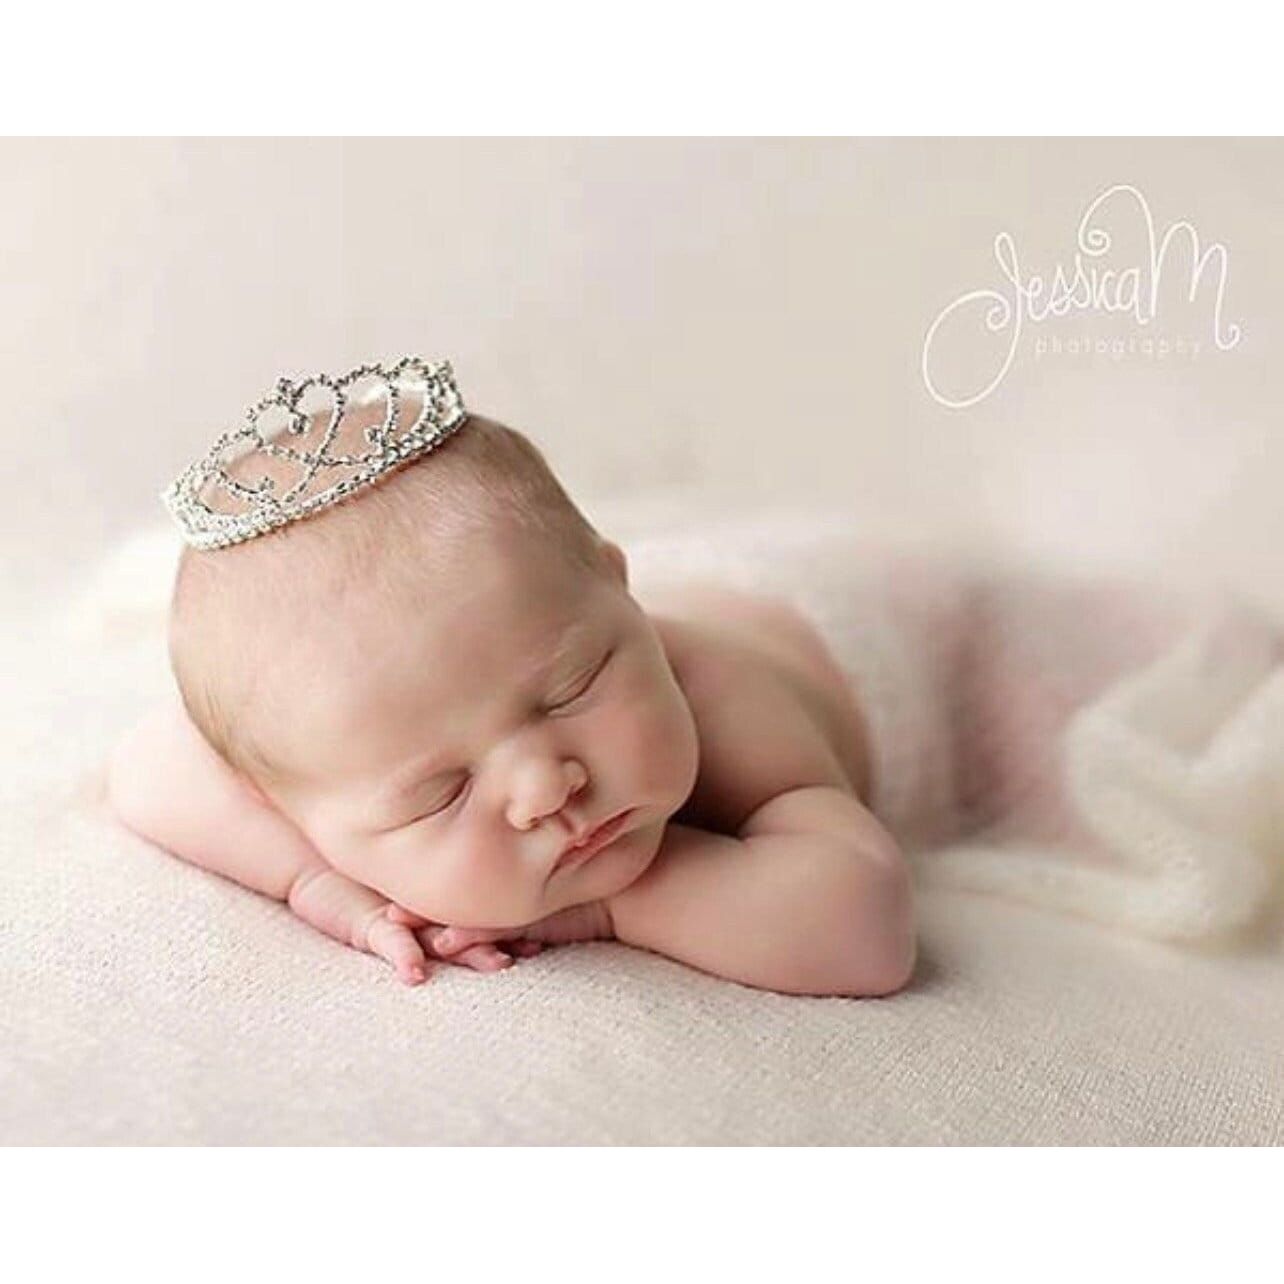 Newborn Crown prop - Sweetheart - Cheerful Lane